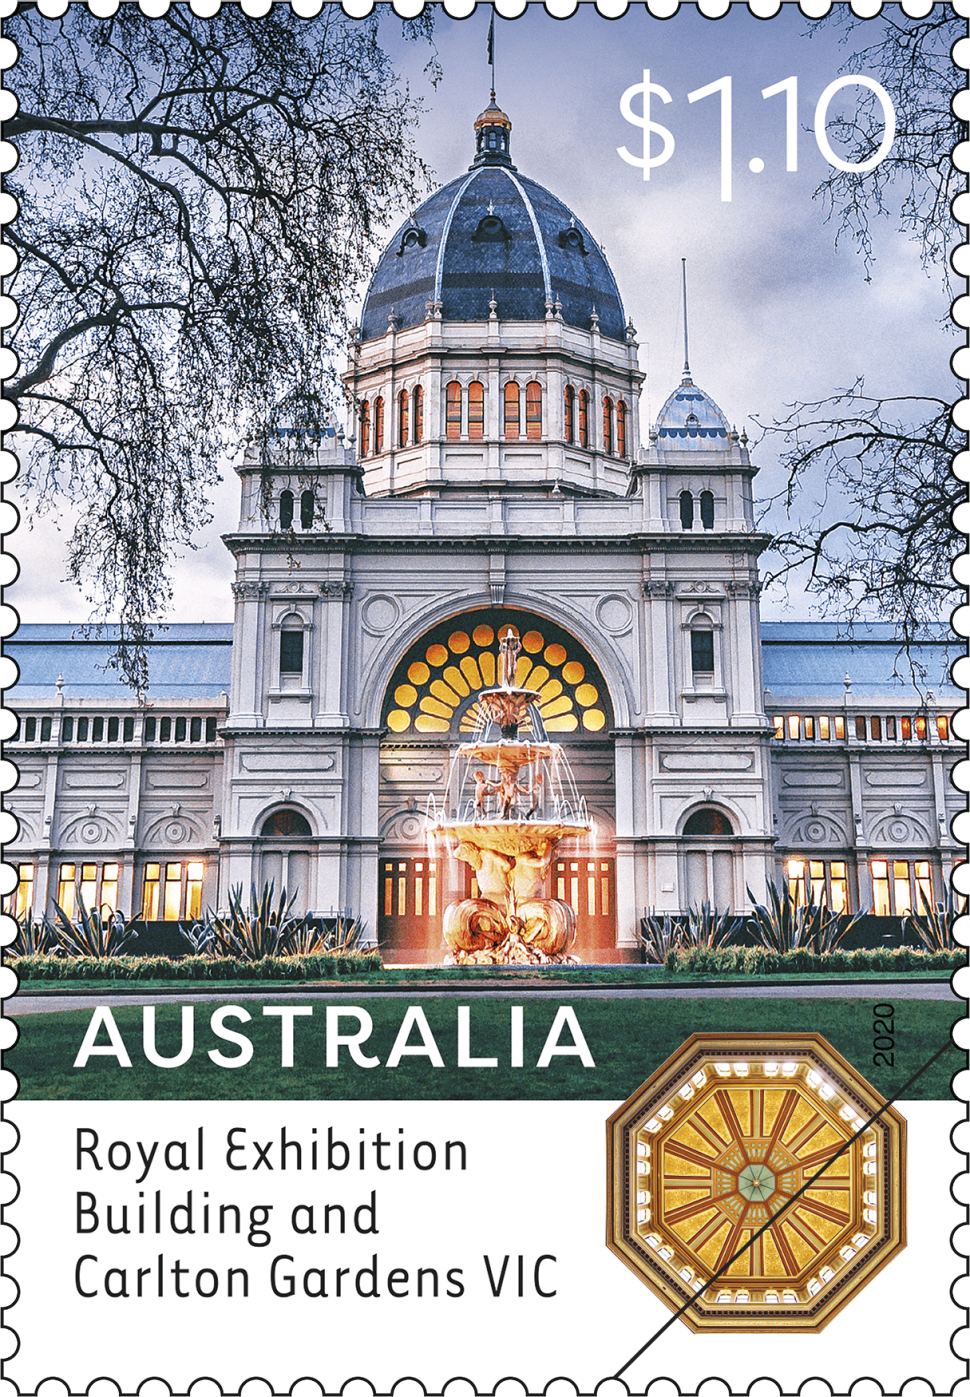 $1.10 - Royal Exhibition Building and Carlton Gardens